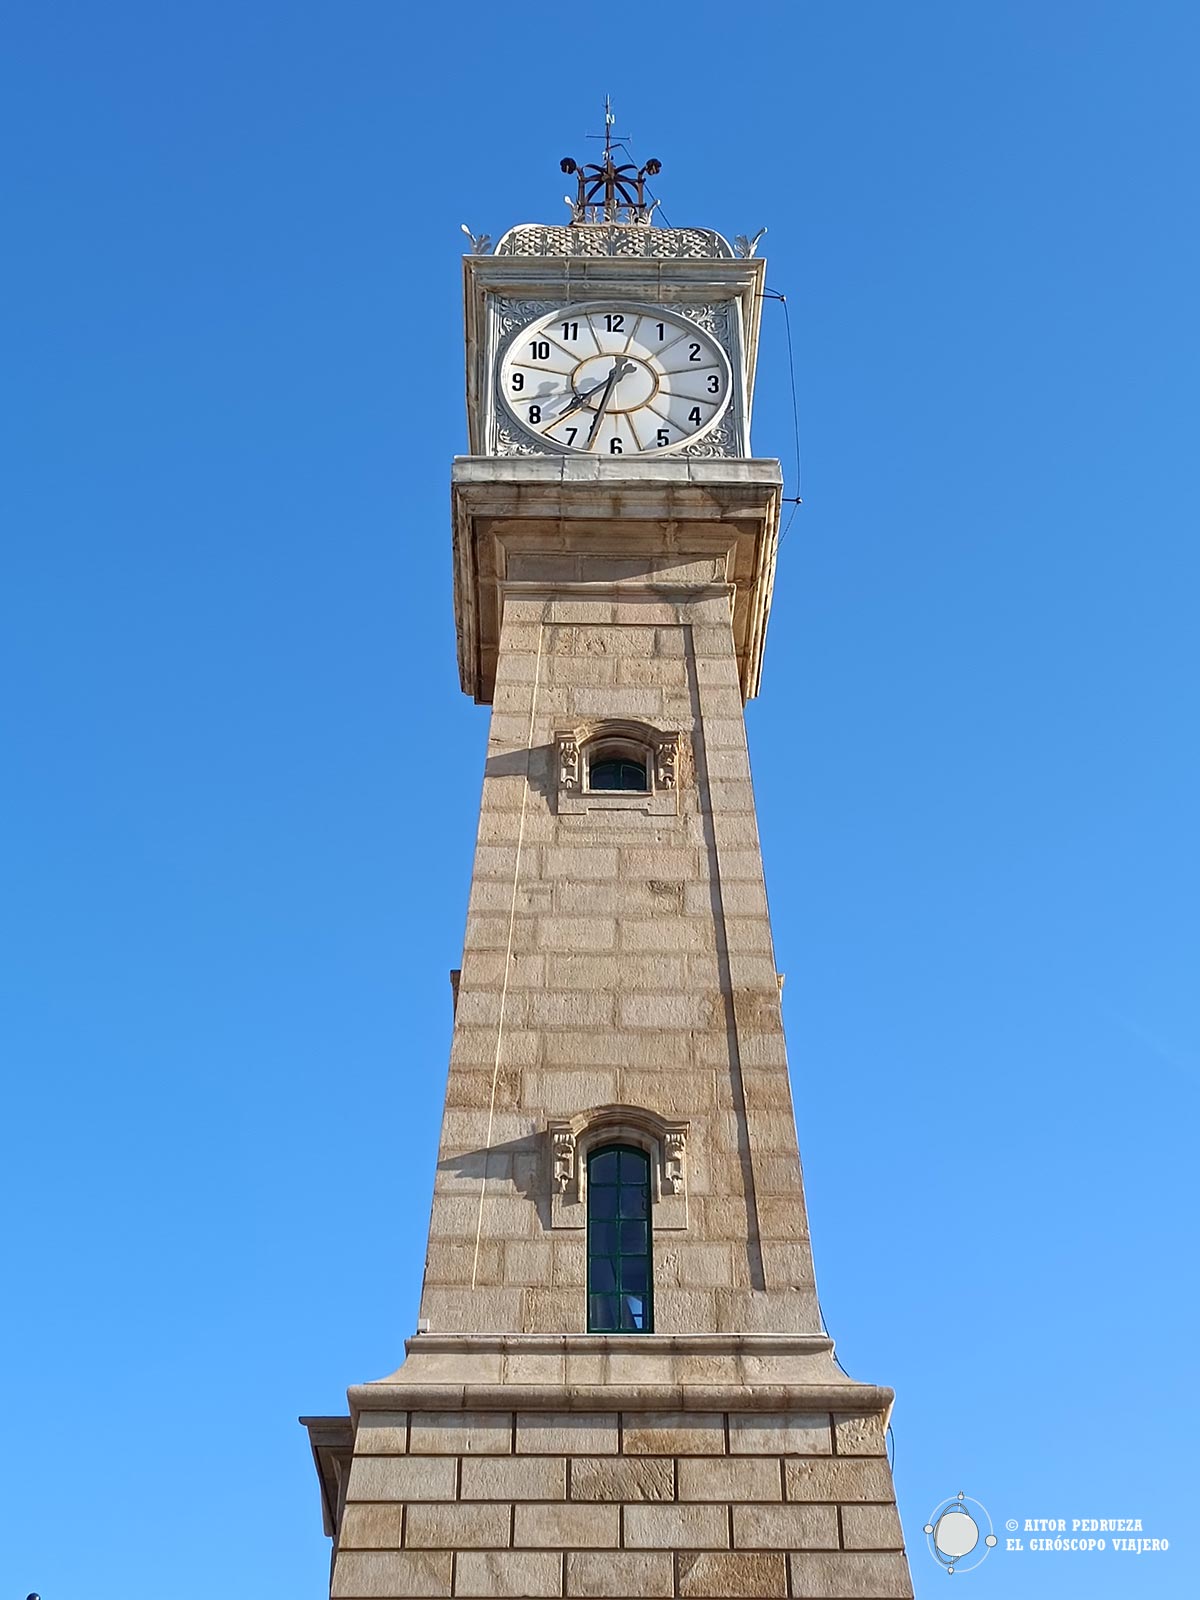 La torre del rellotge, antiguo faro de Barcelona